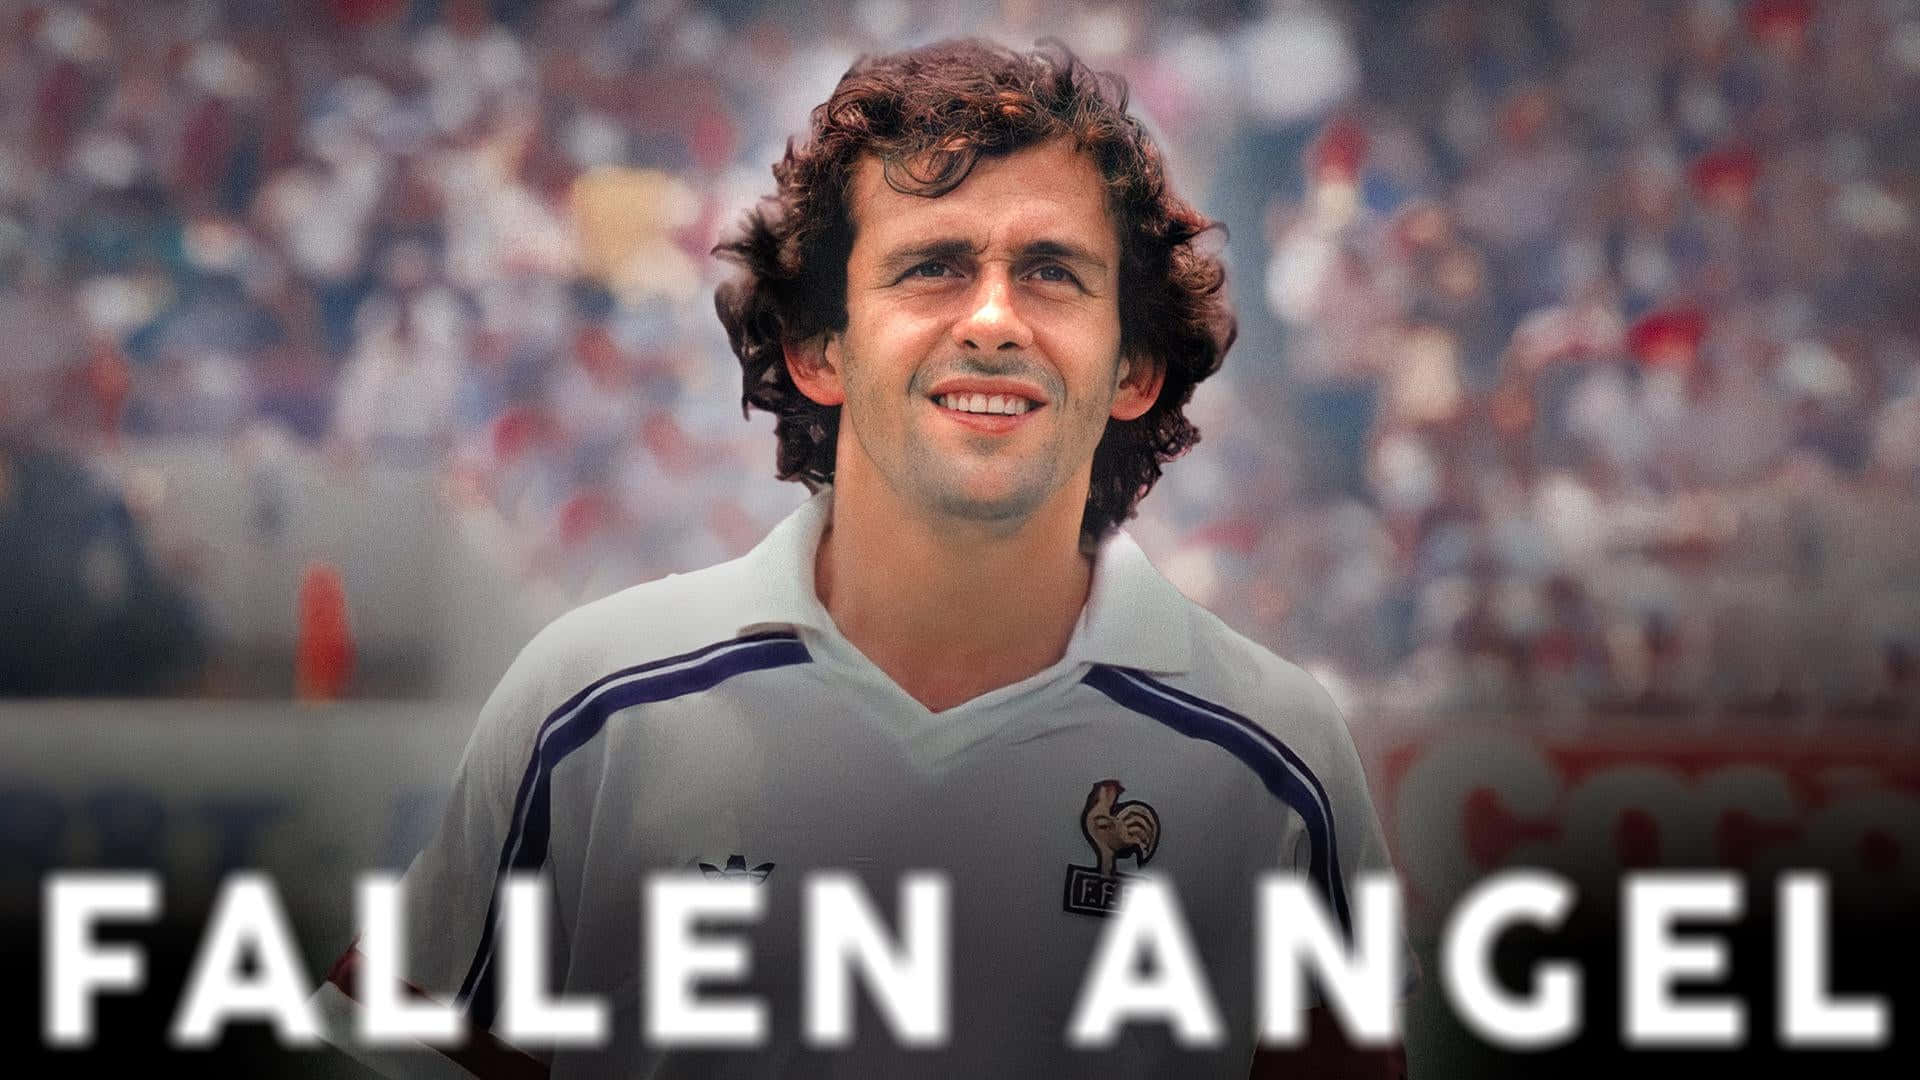 Michel Platini Fallen Angel Football Poster Photography Wallpaper